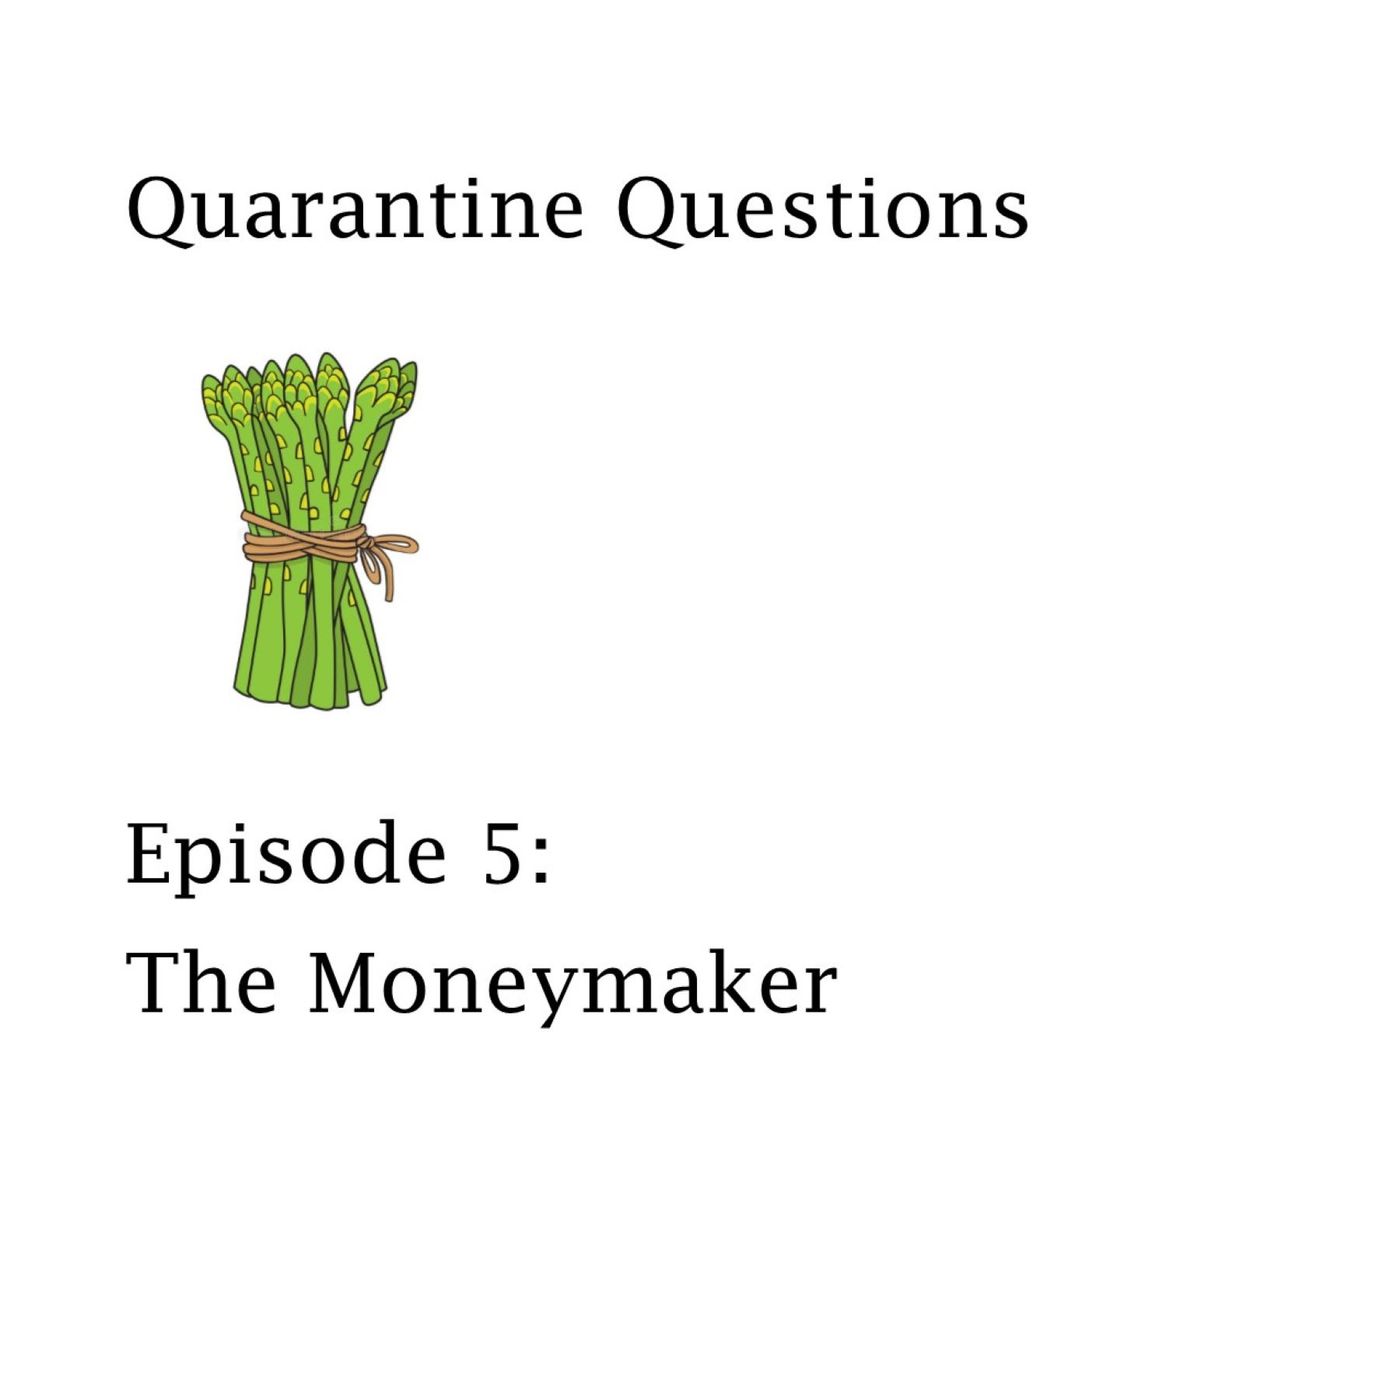 Episode 5: The Moneymaker